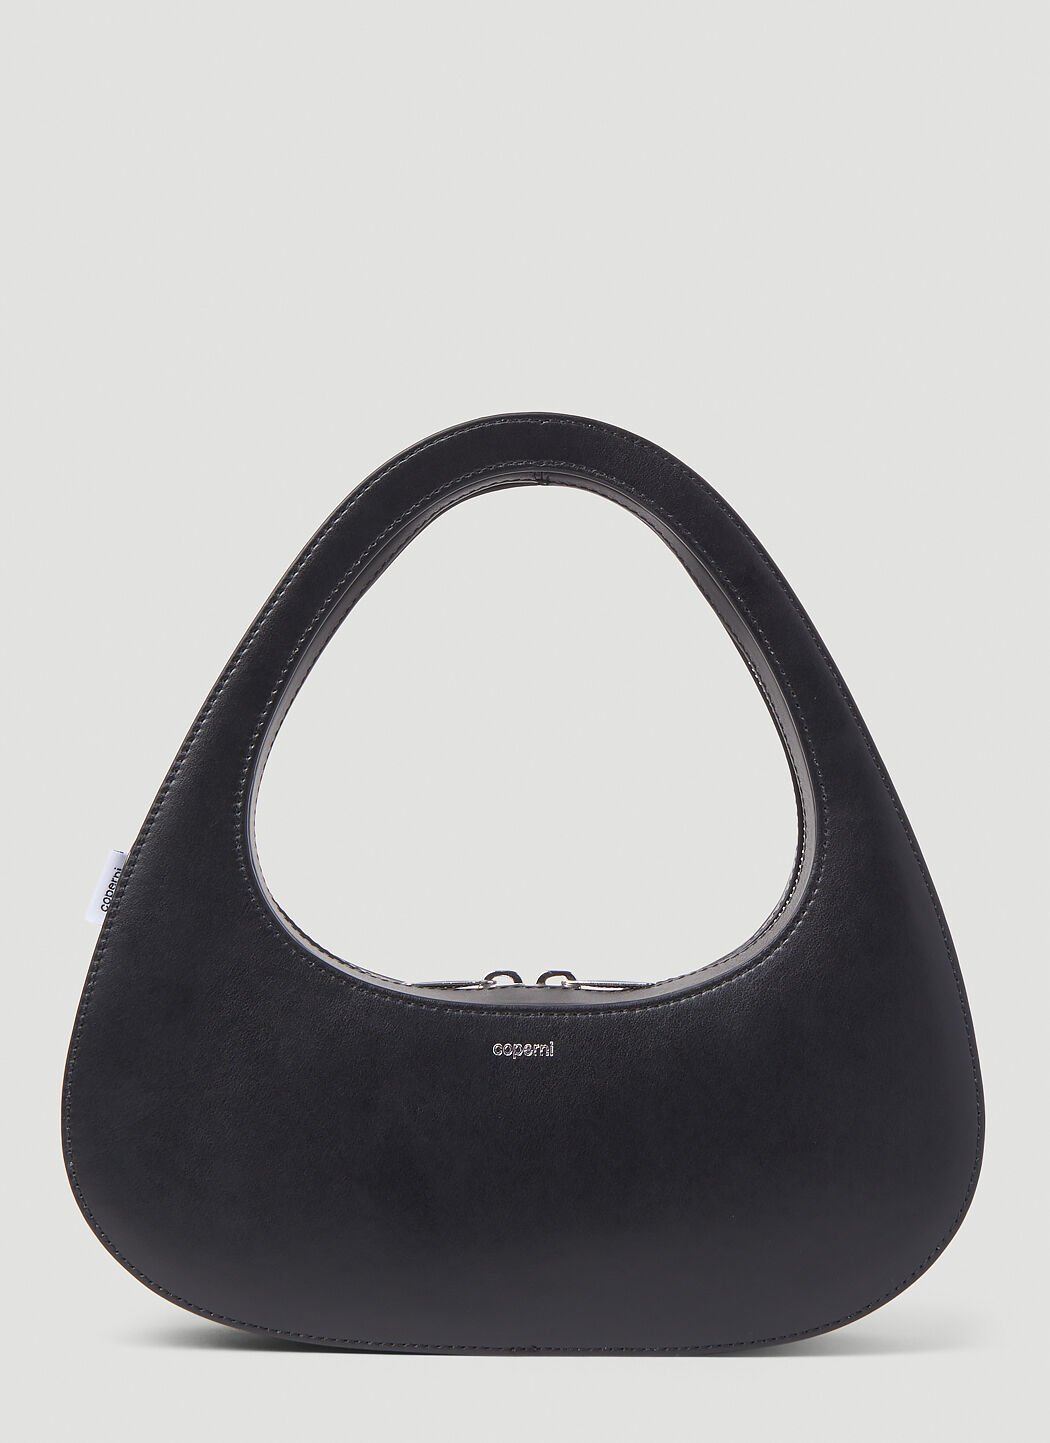 Coperni Baguette Swipe Handbag Black cpn0253004